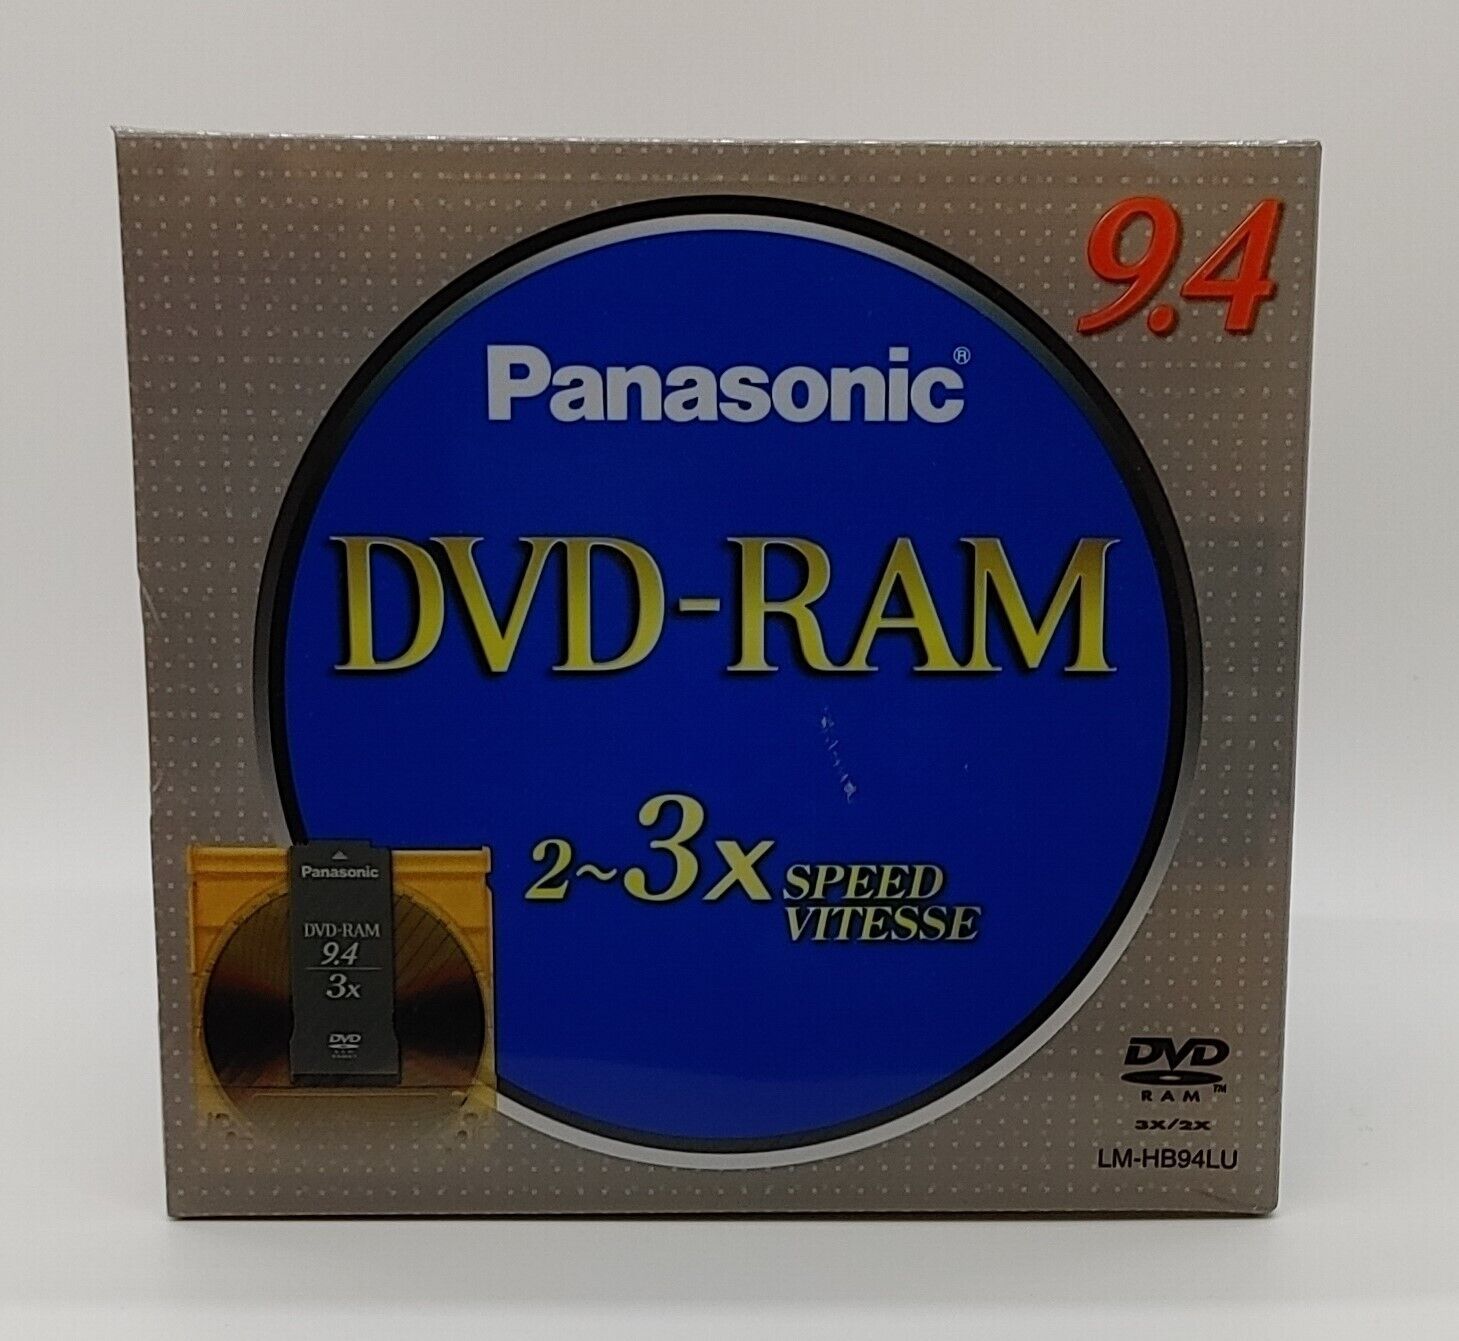 NEW - Panasonic LM-HB94LU 2~3x 9.4GB DVD-RAM 33Mbps Type 4 Recordable Blank Disc